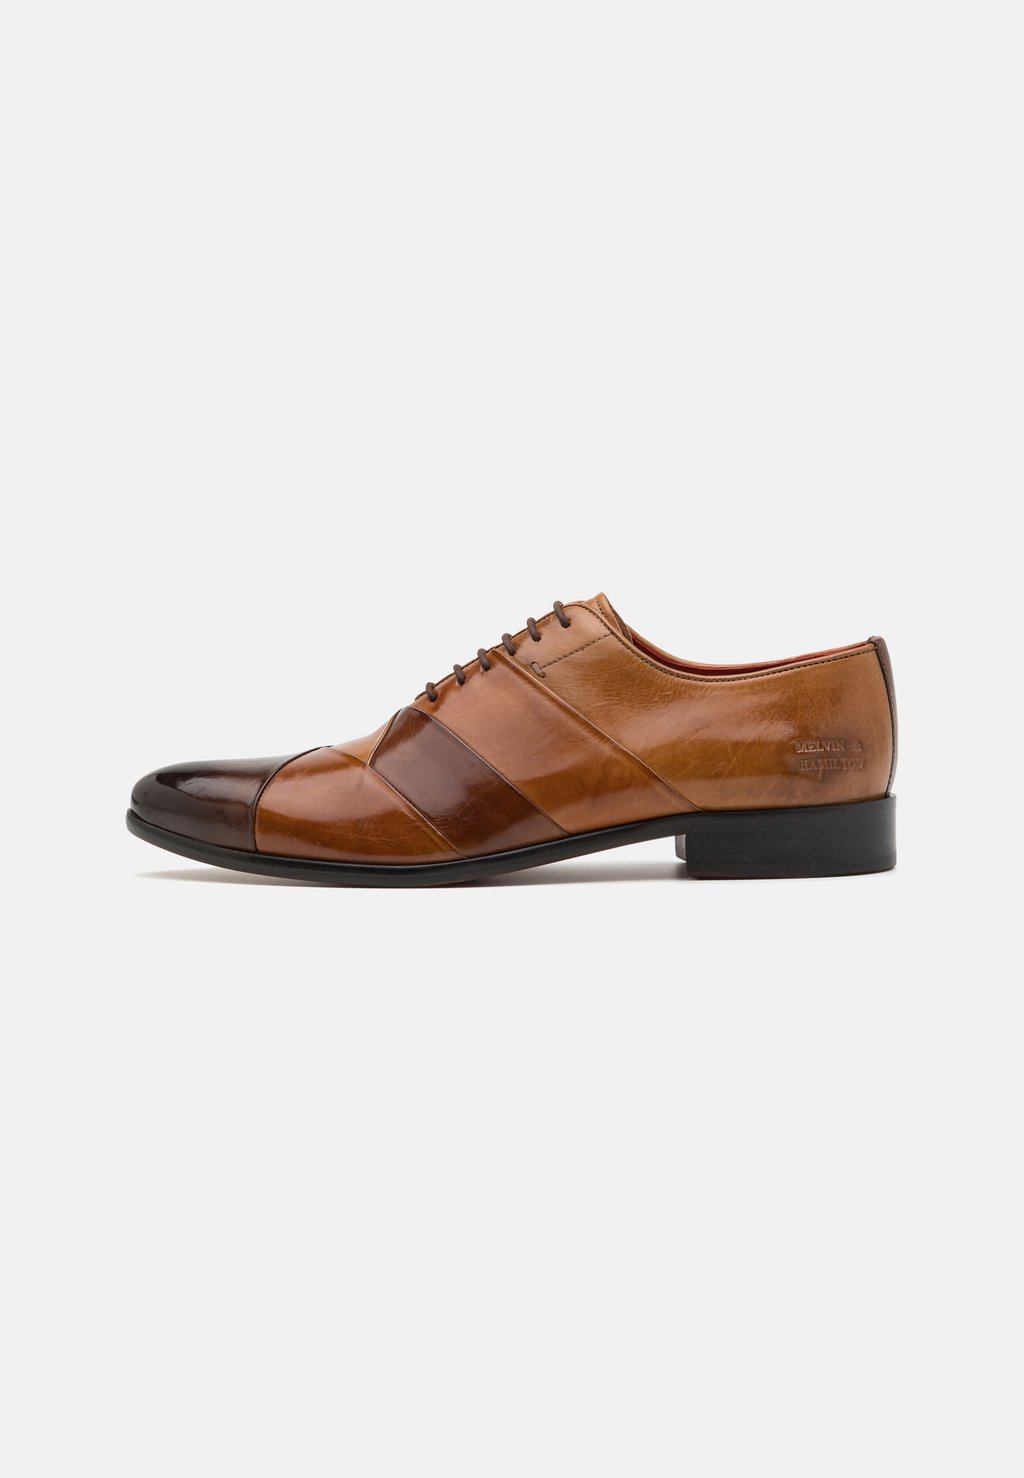 Элегантные туфли на шнуровке Toni 51 Melvin & Hamilton, цвет mid brown/tan/sand/wood/tan/red/natural/brown кроссовки roxy minnow mid tan